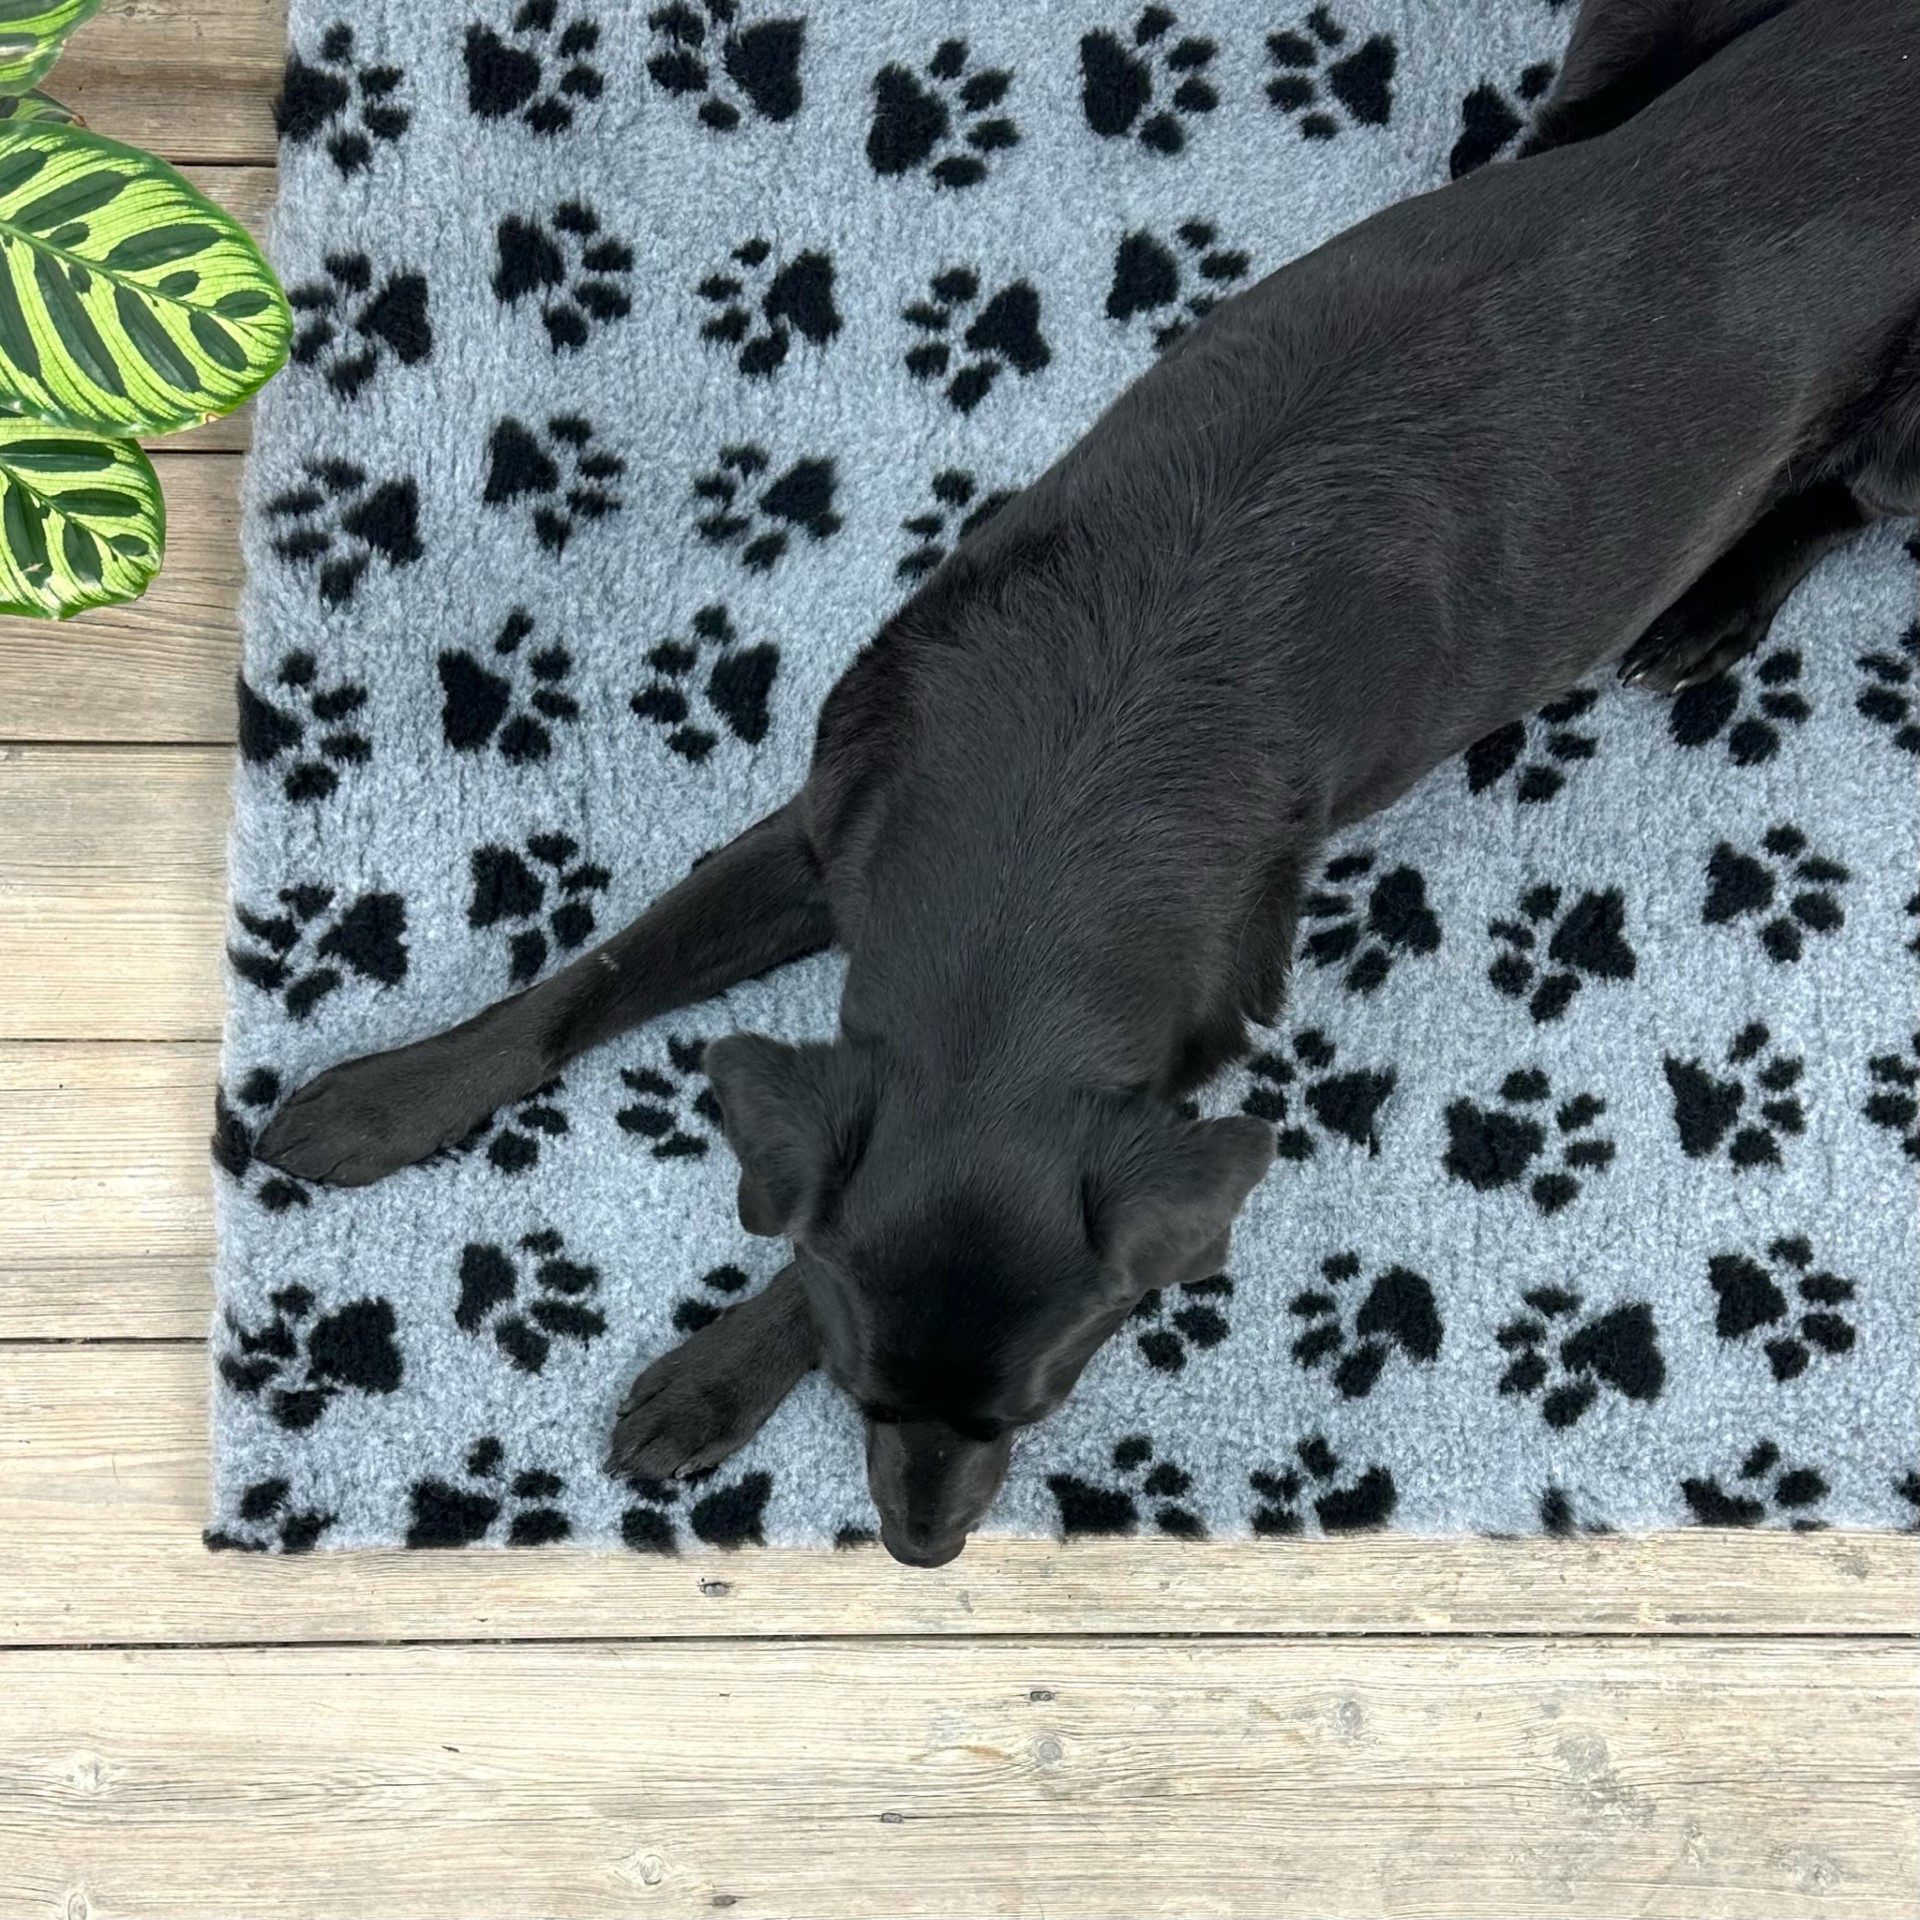 Grey Black Paws high grade Vet Bedding non-slip back bed fleece for pets